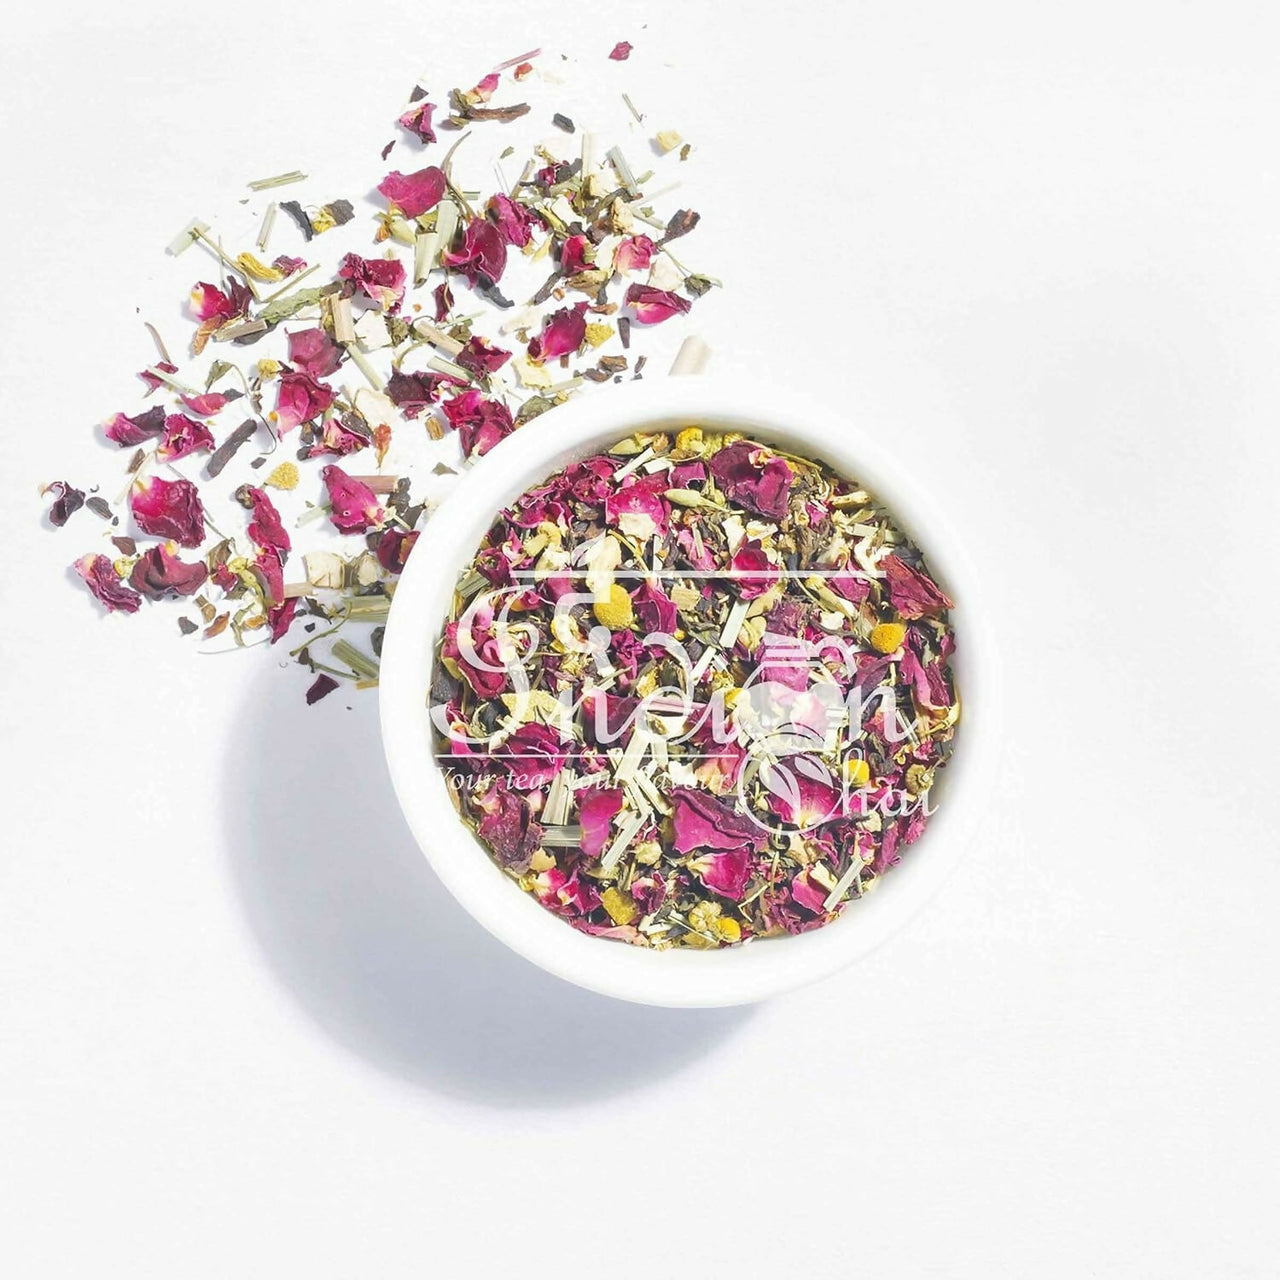 The Indian Chai - Hibiscus Blossom Tea 30 Pyramid Tea Bags - Distacart